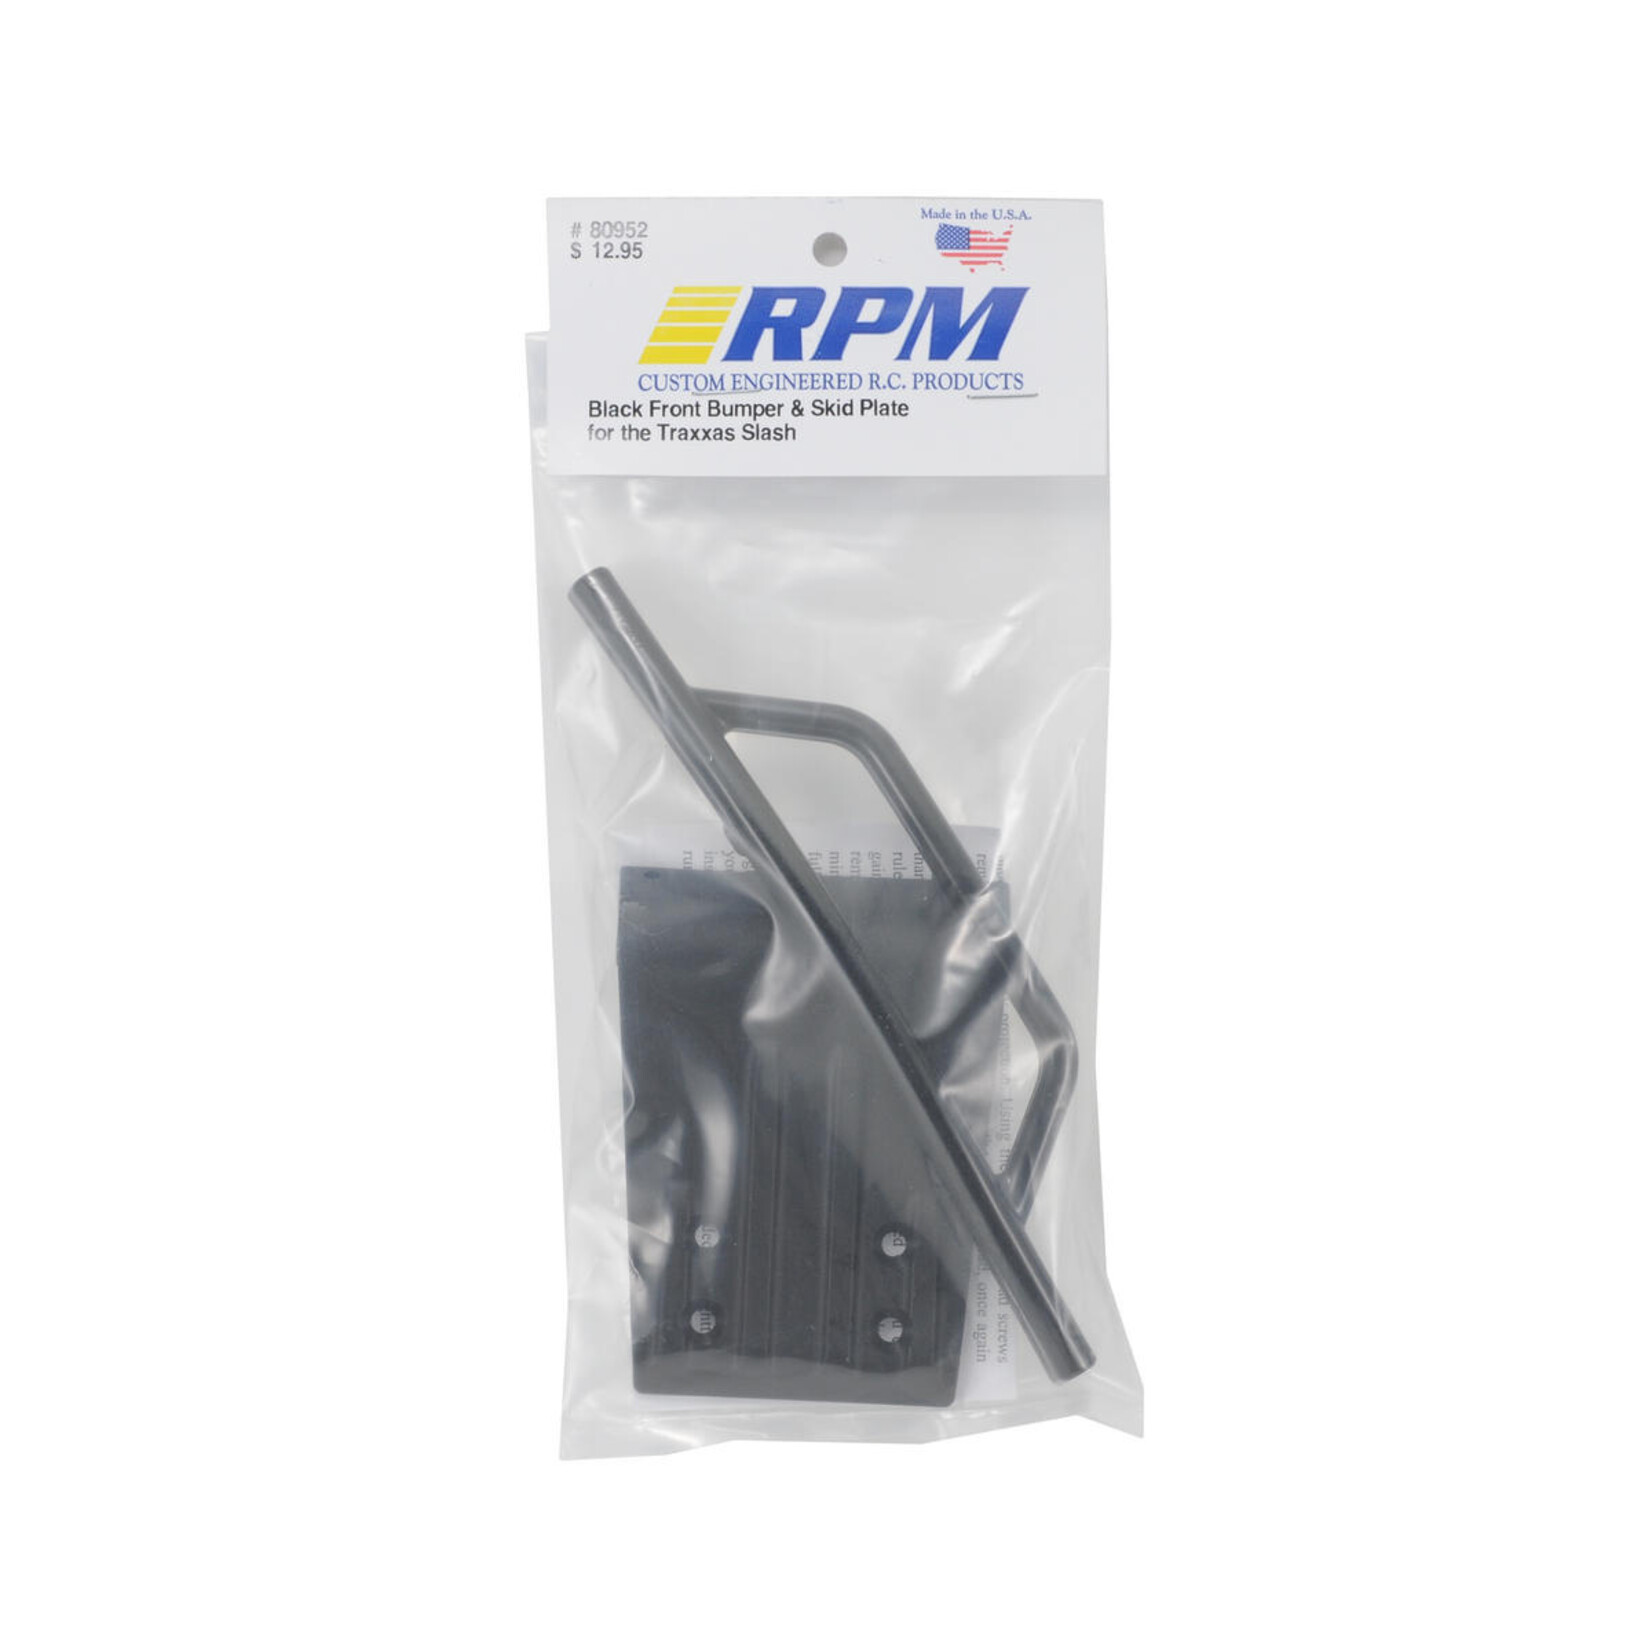 RPM RPM Traxxas Slash Front Bumper & Skid Plate (Black) #80952